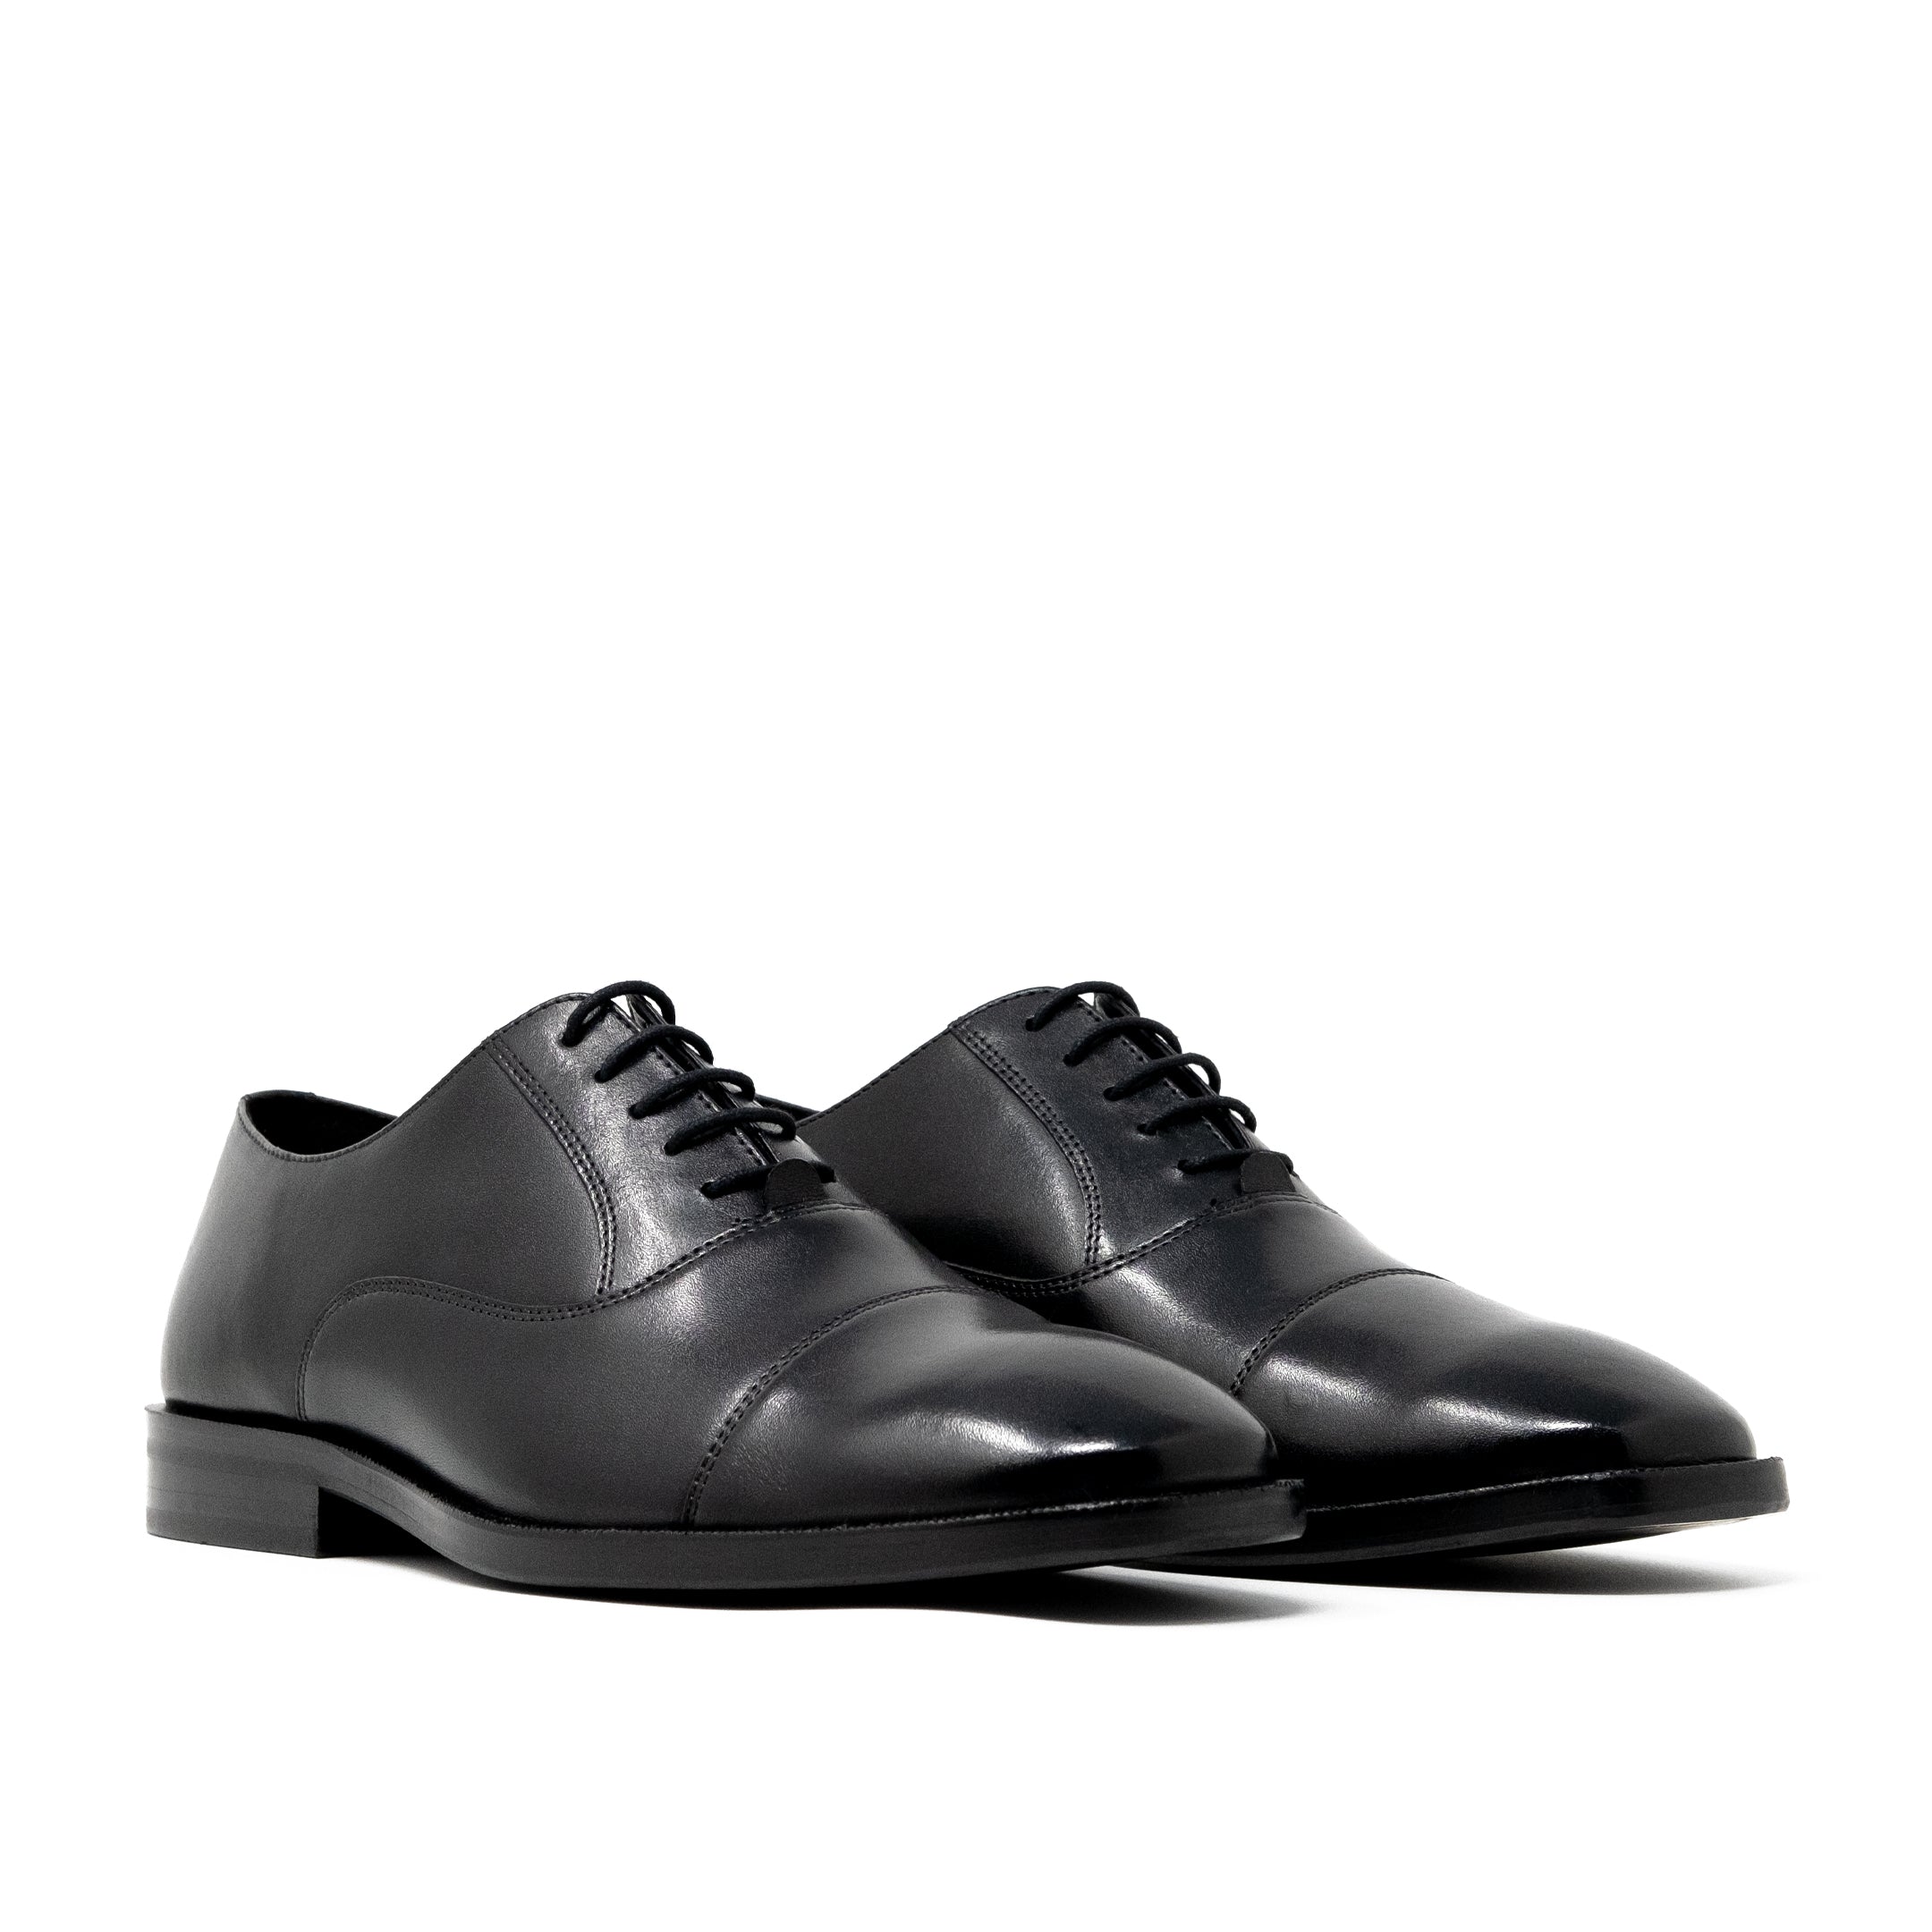 Walk London Mens Alex Toe Cap Shoe in Black Leather